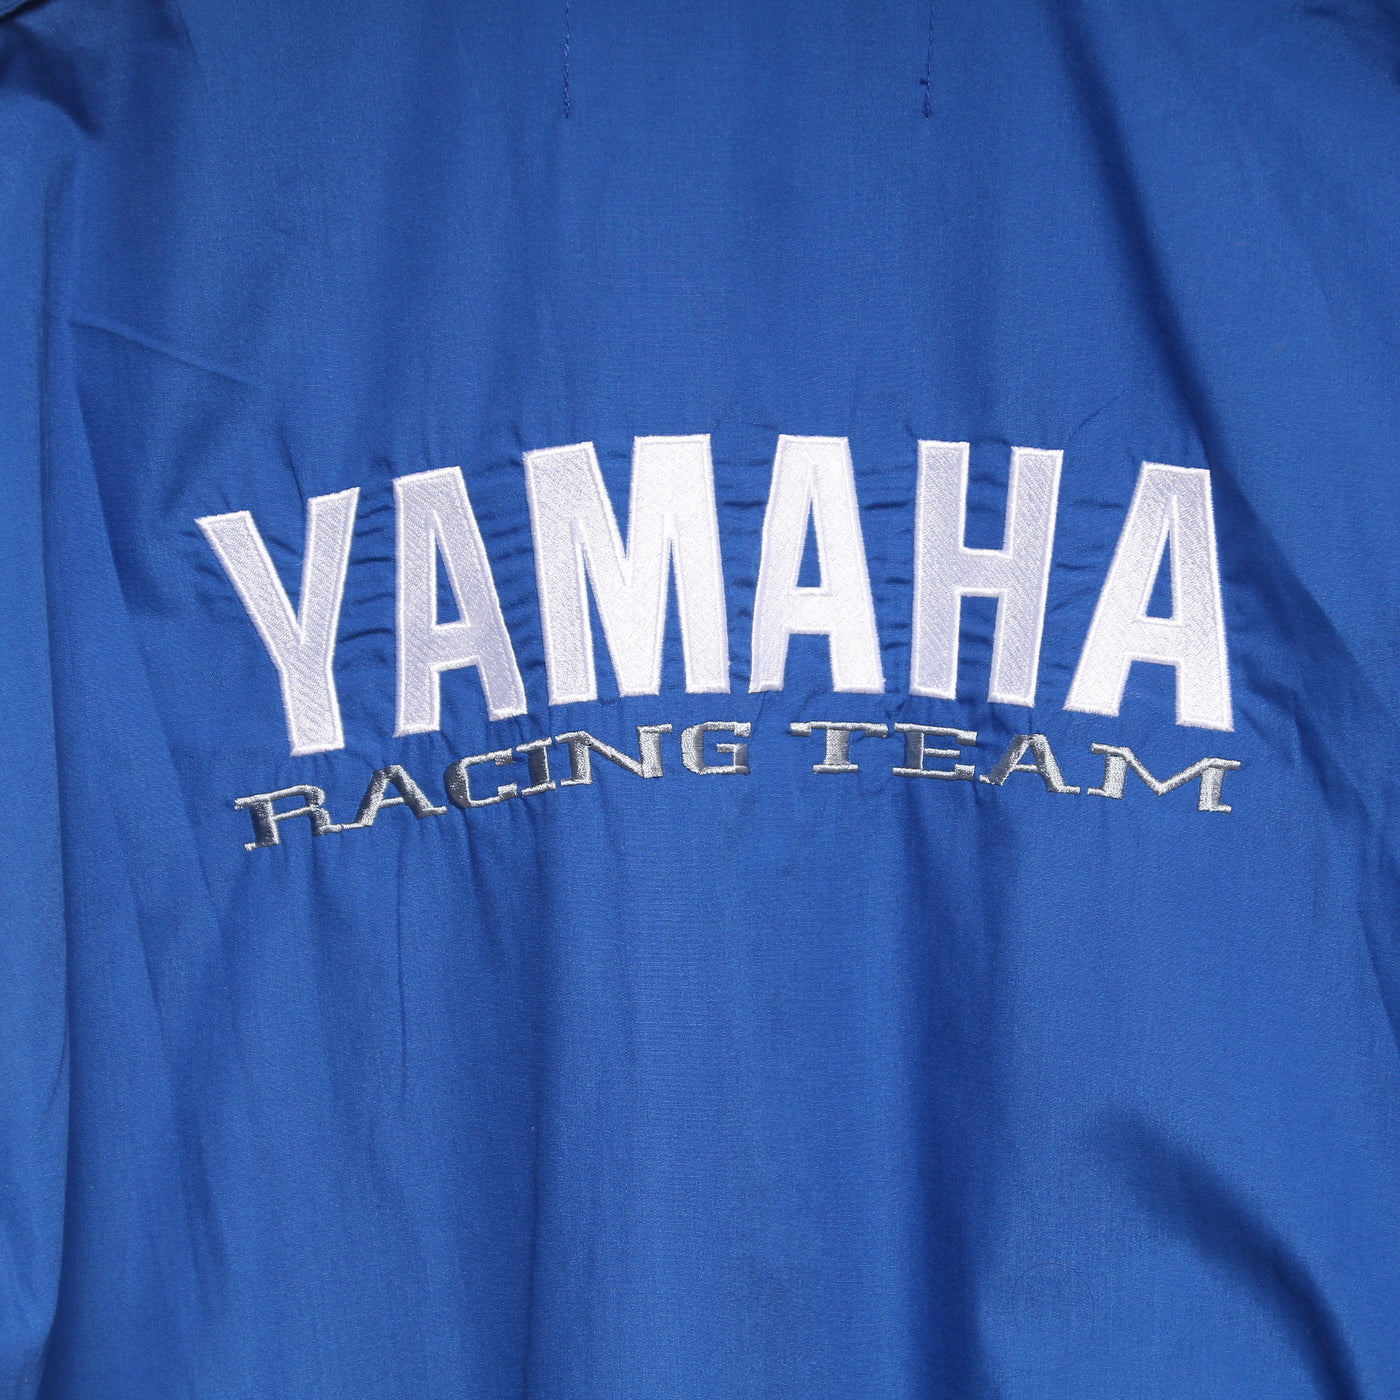 ADM Yamaha Racing Team Camicia Vintage Blu e Bianco Uomo Taglia XL Made in USA